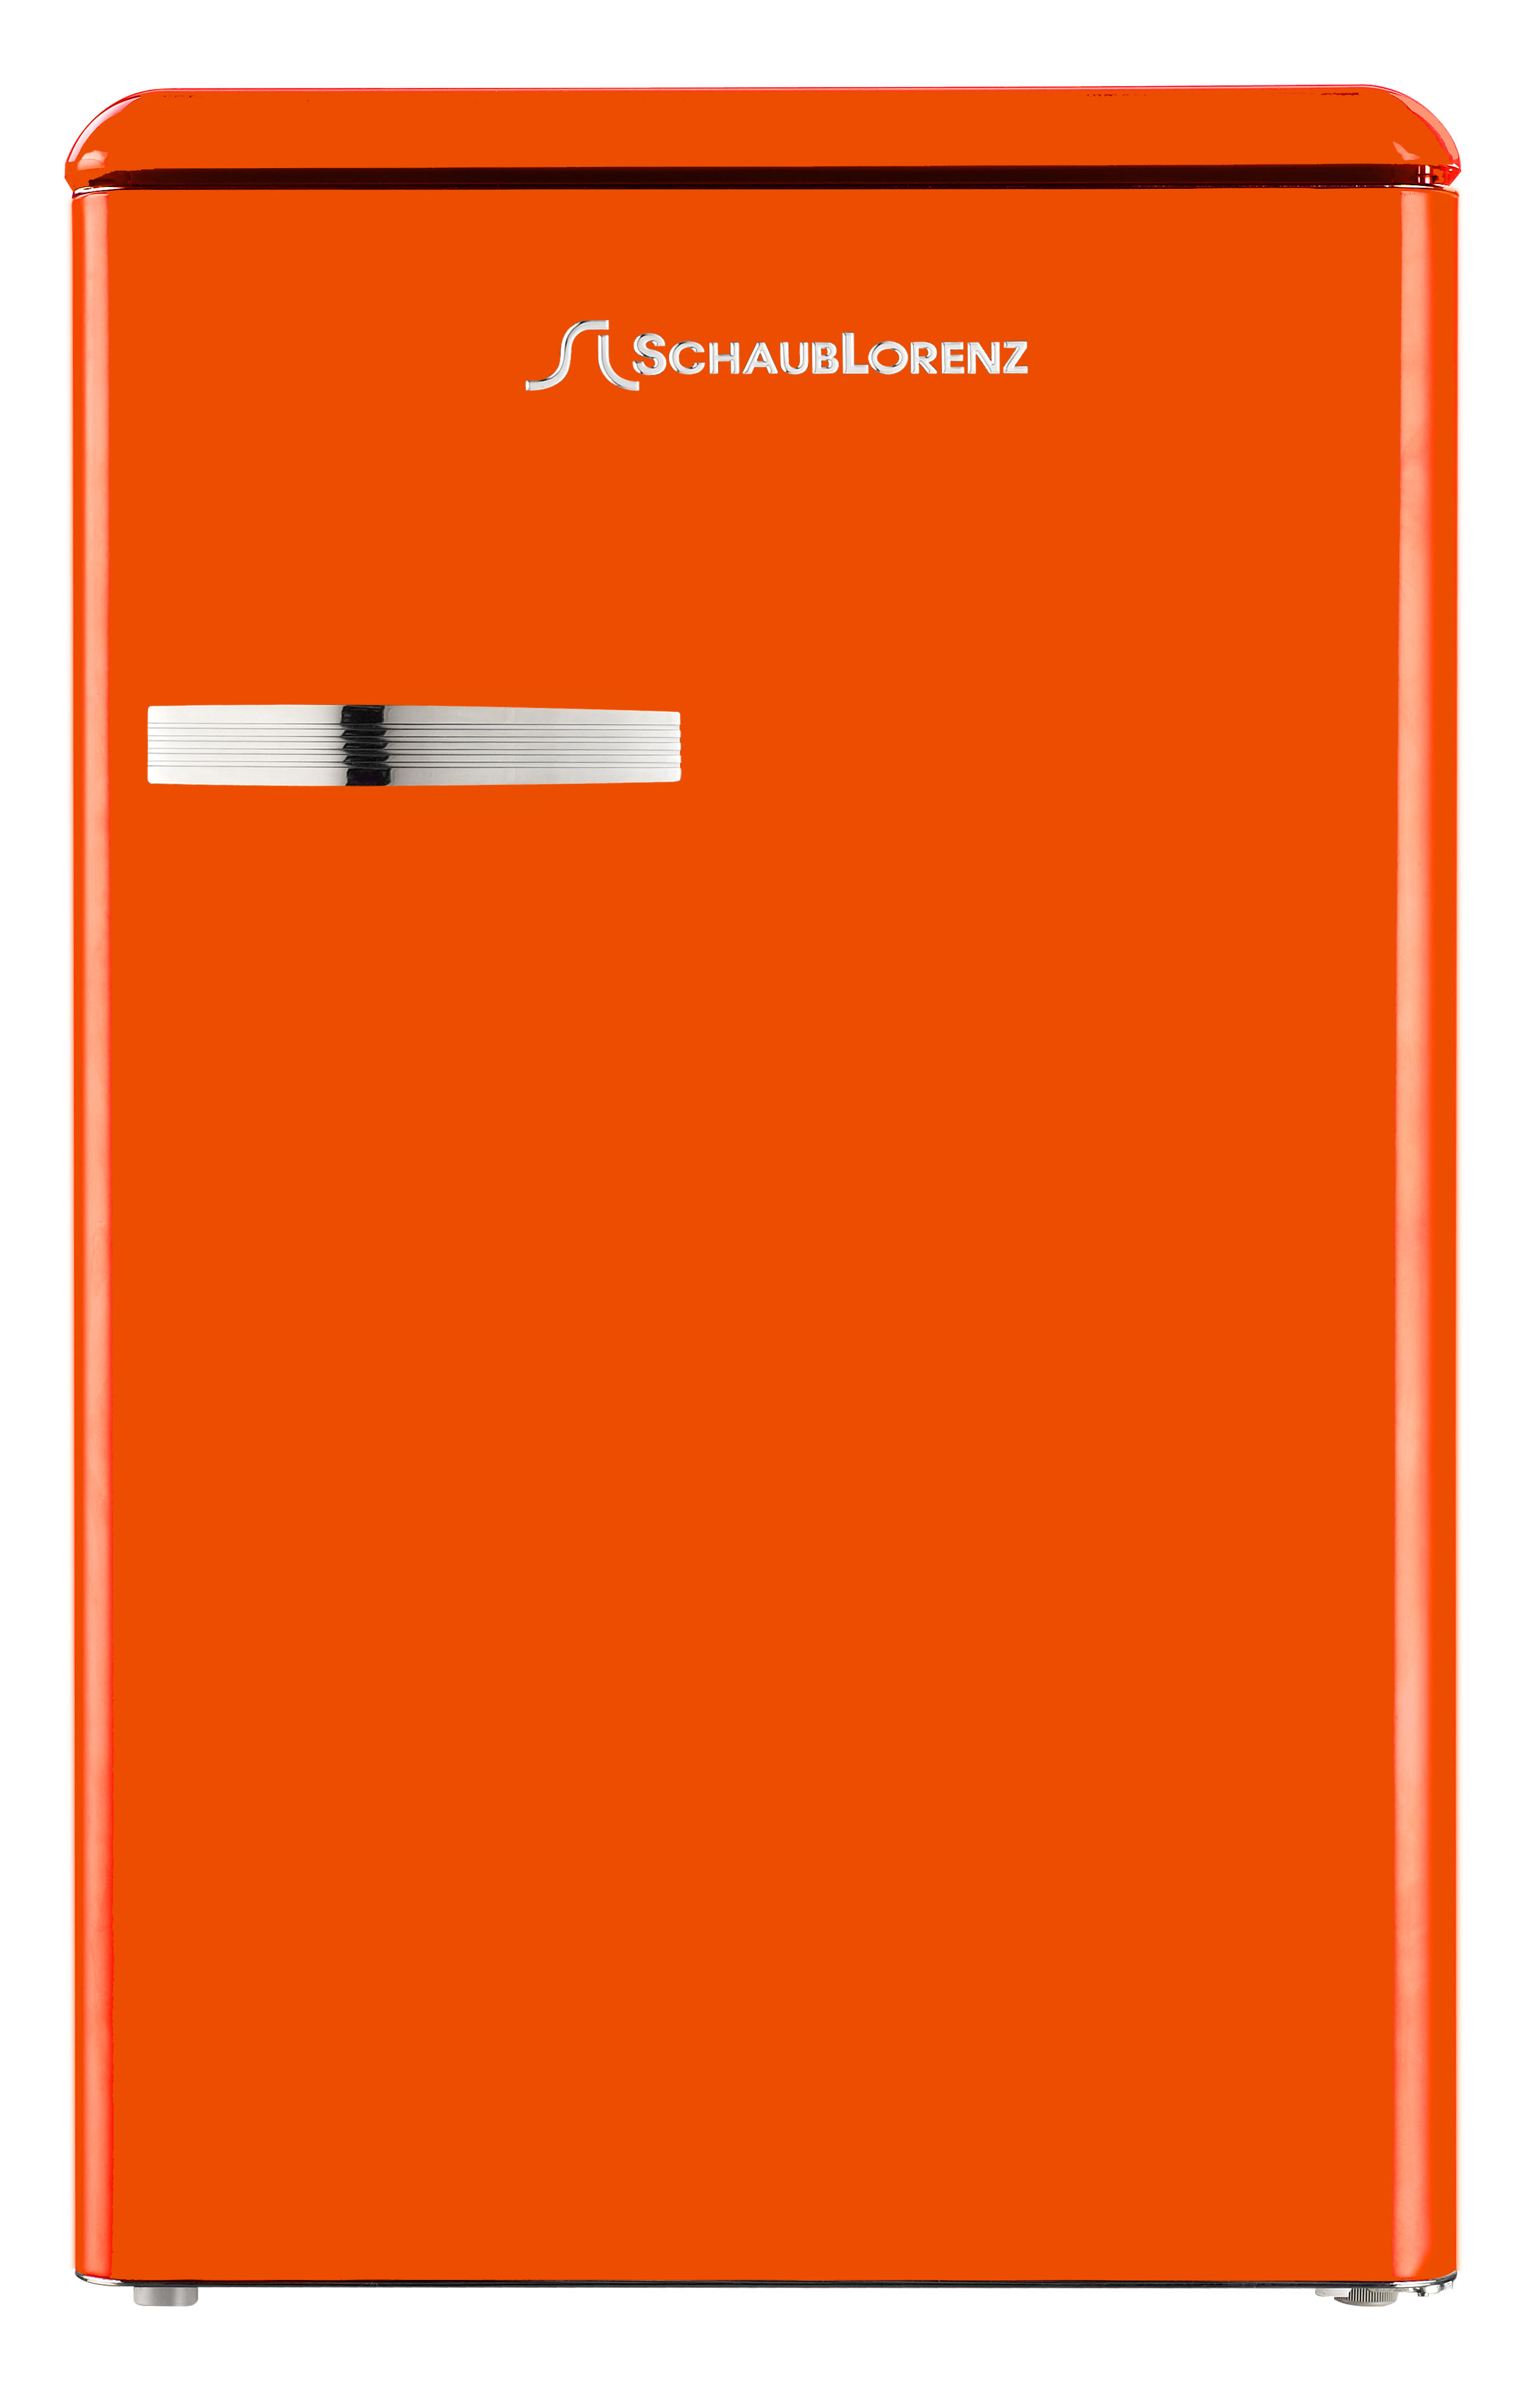 Stadscentrum Meerdere server TL55O-8632 Schneider tafelmodel koelkast oranje